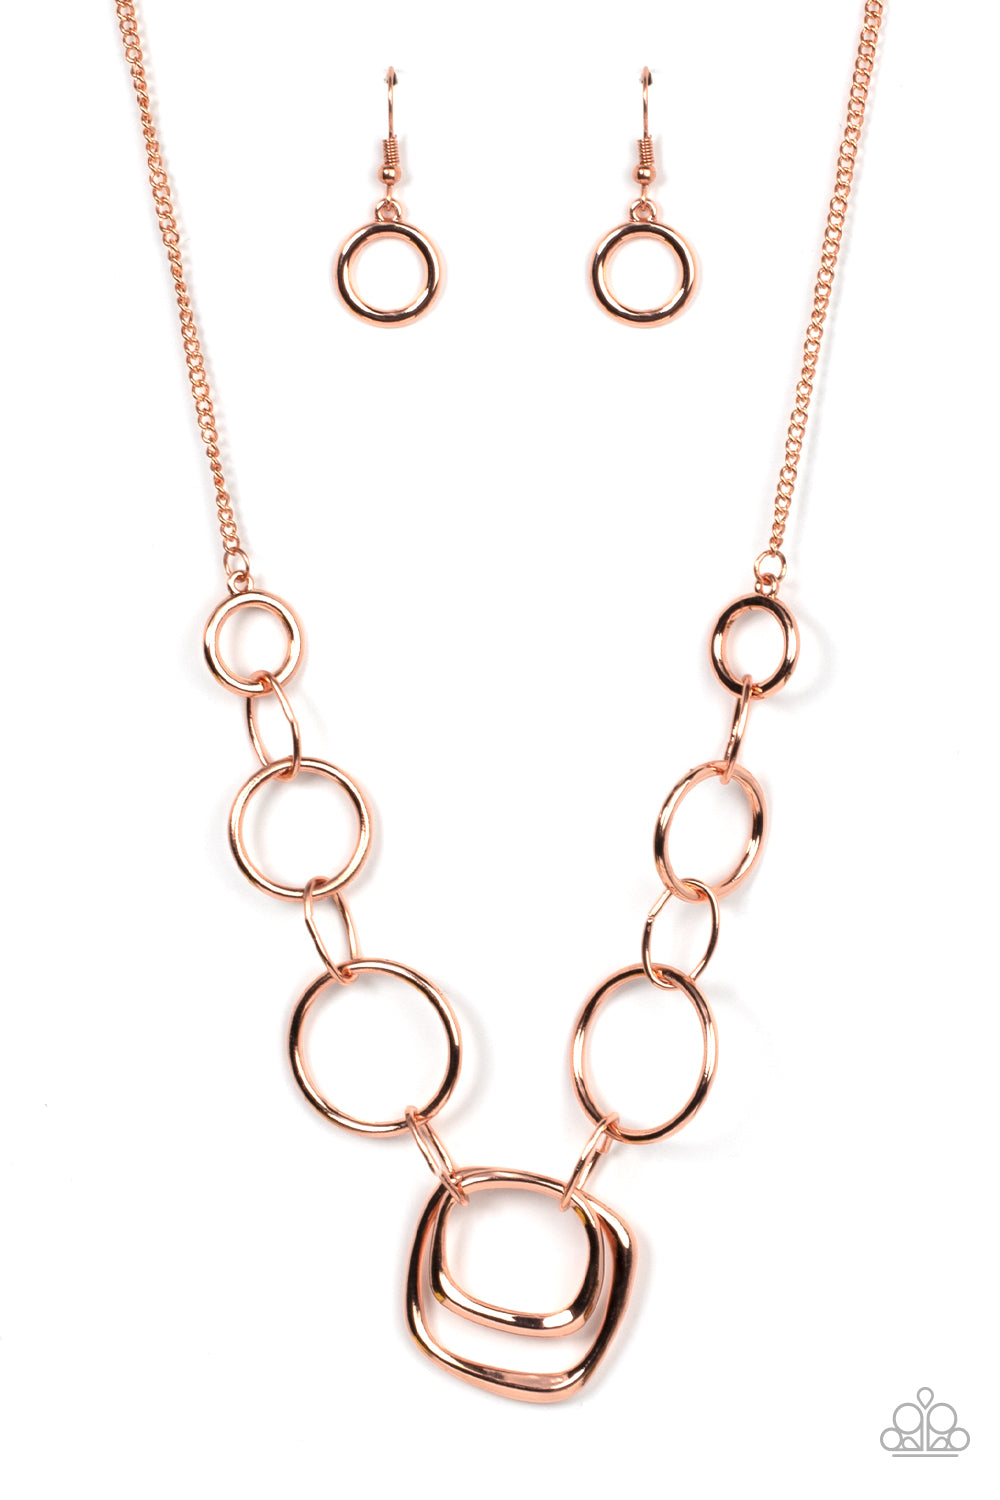 Paparazzi Necklaces - Linked Up Luminosity - Copper